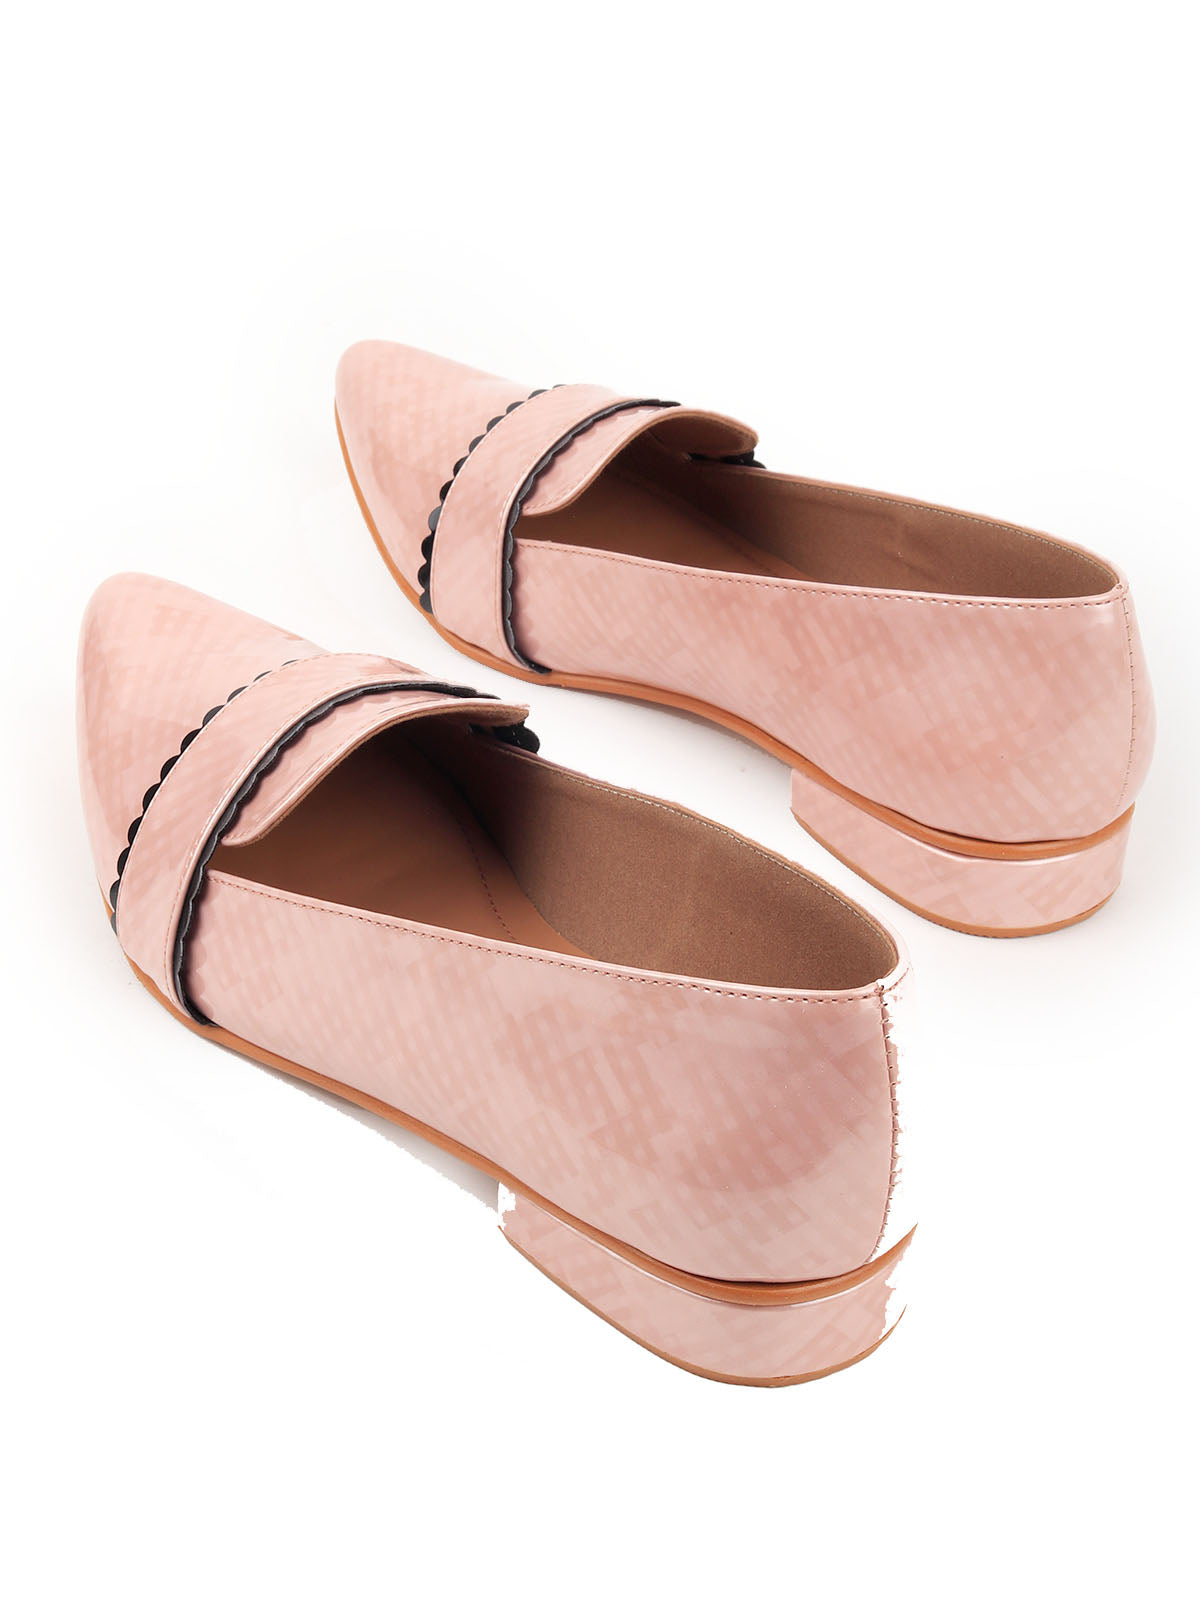 Blush Pink Patterned Flat Loafers